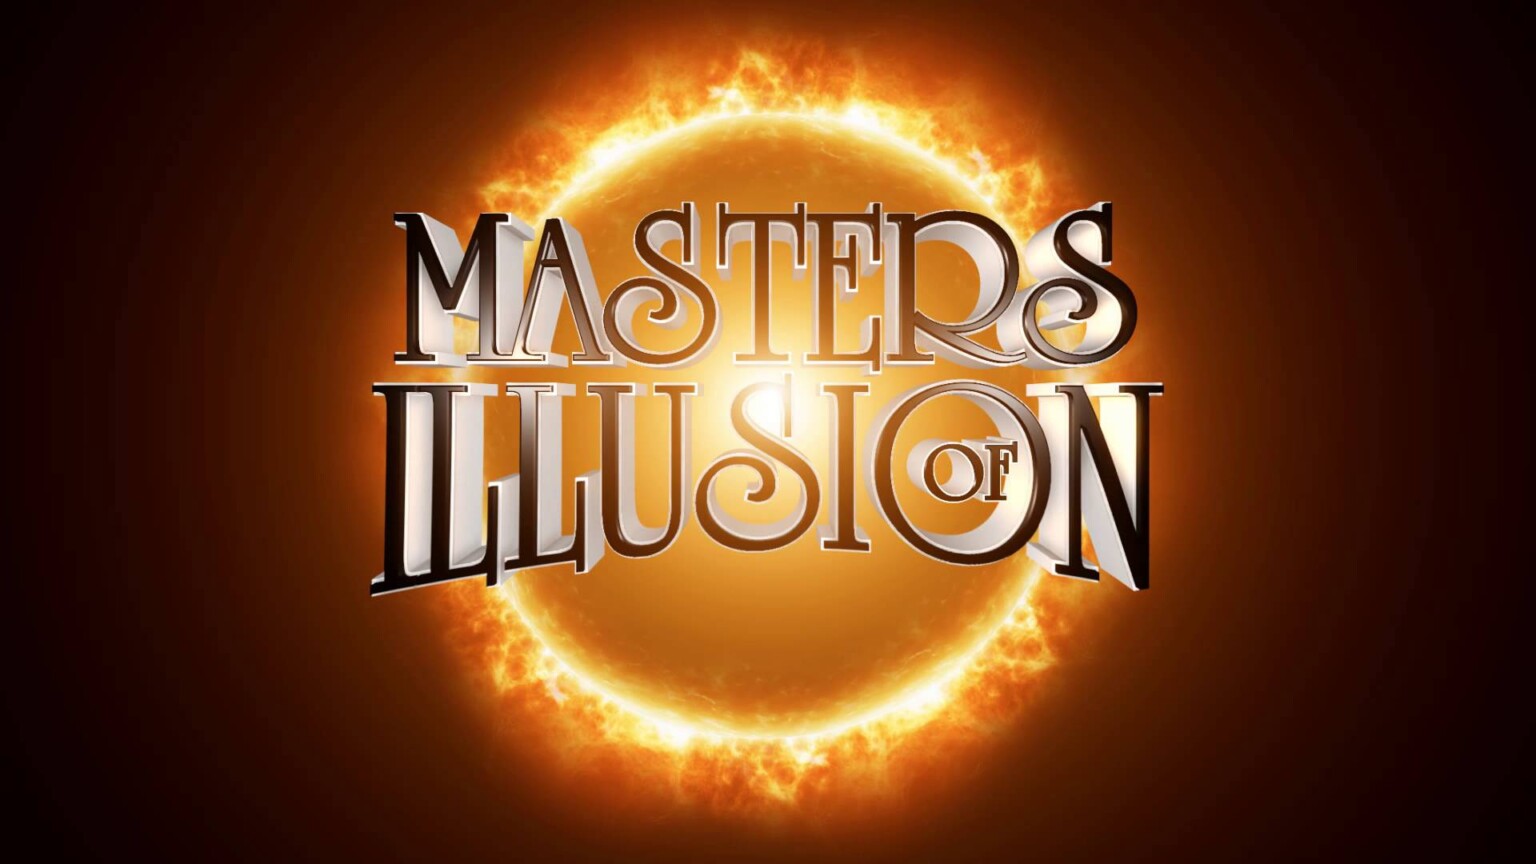 download illusion masters